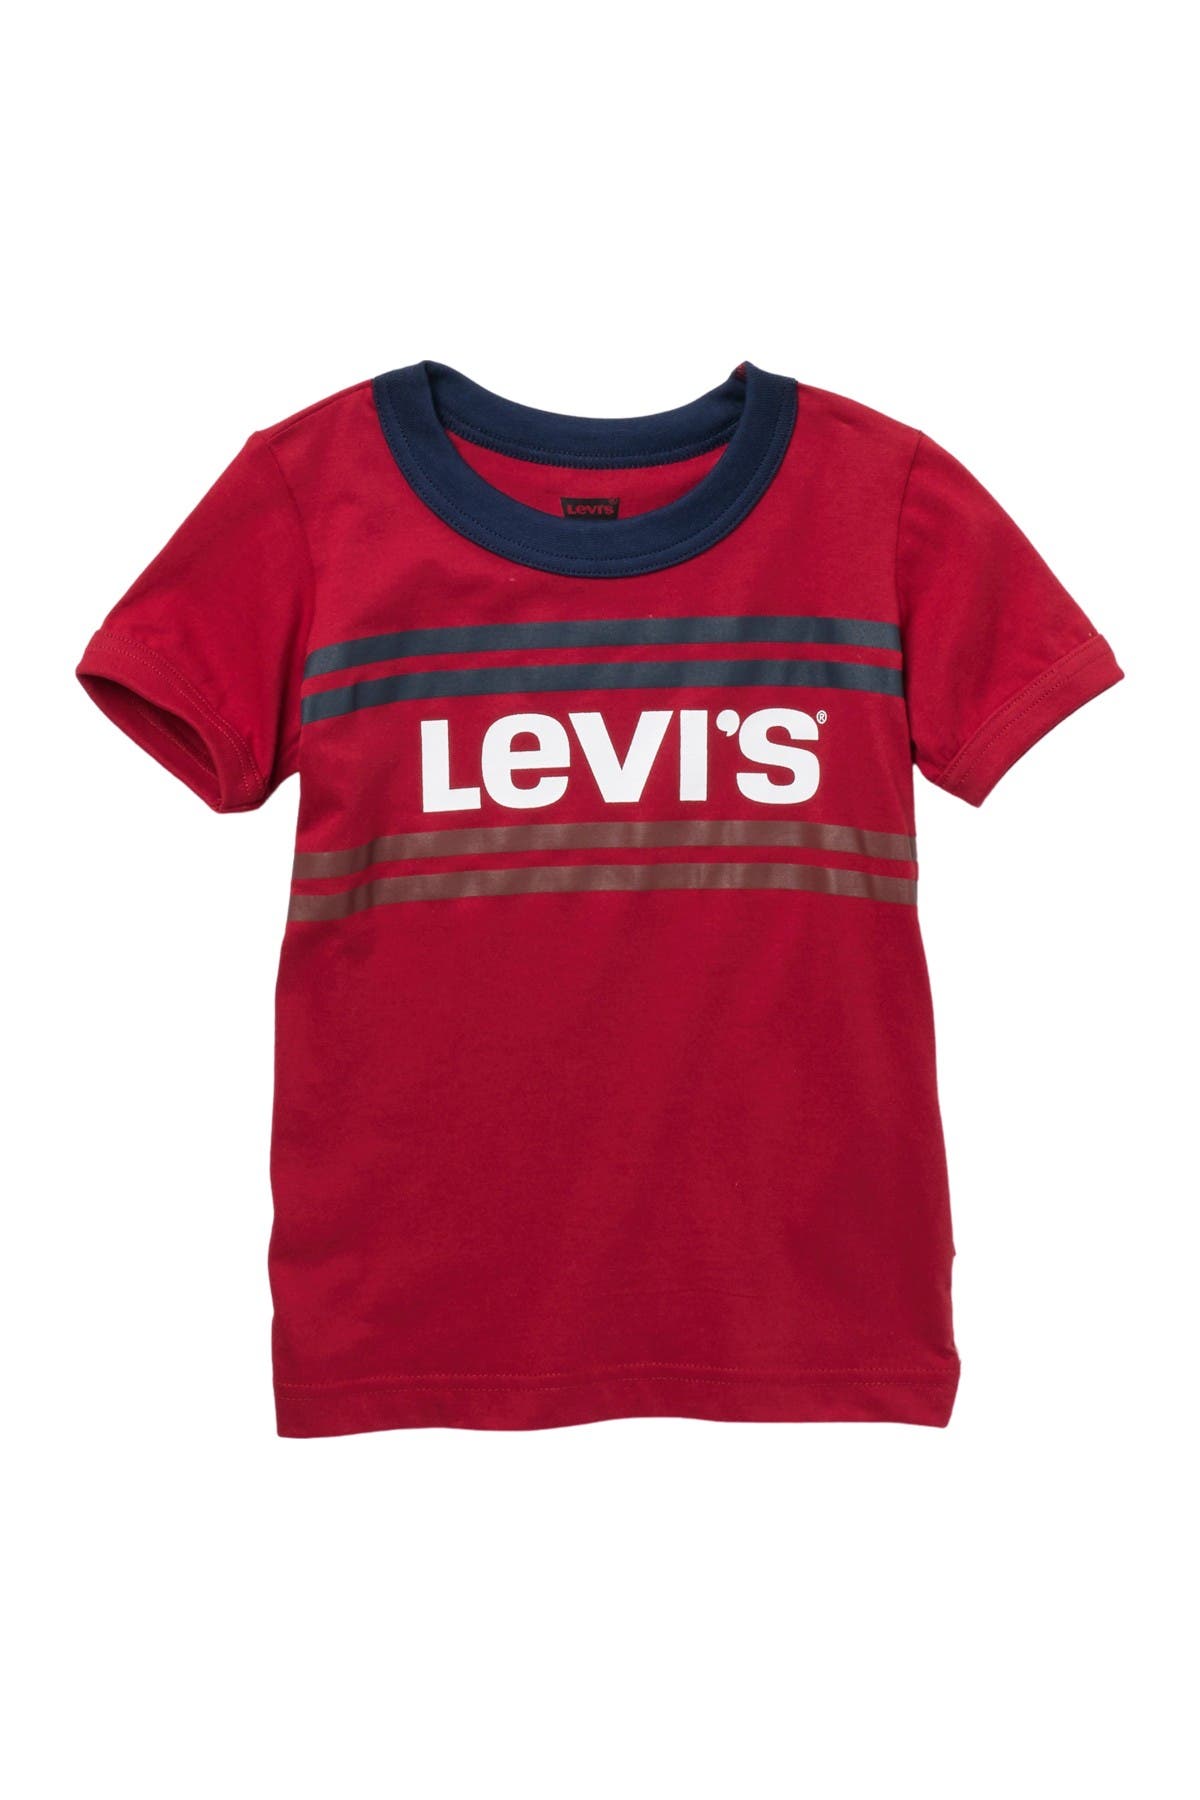 levis red logo t shirt